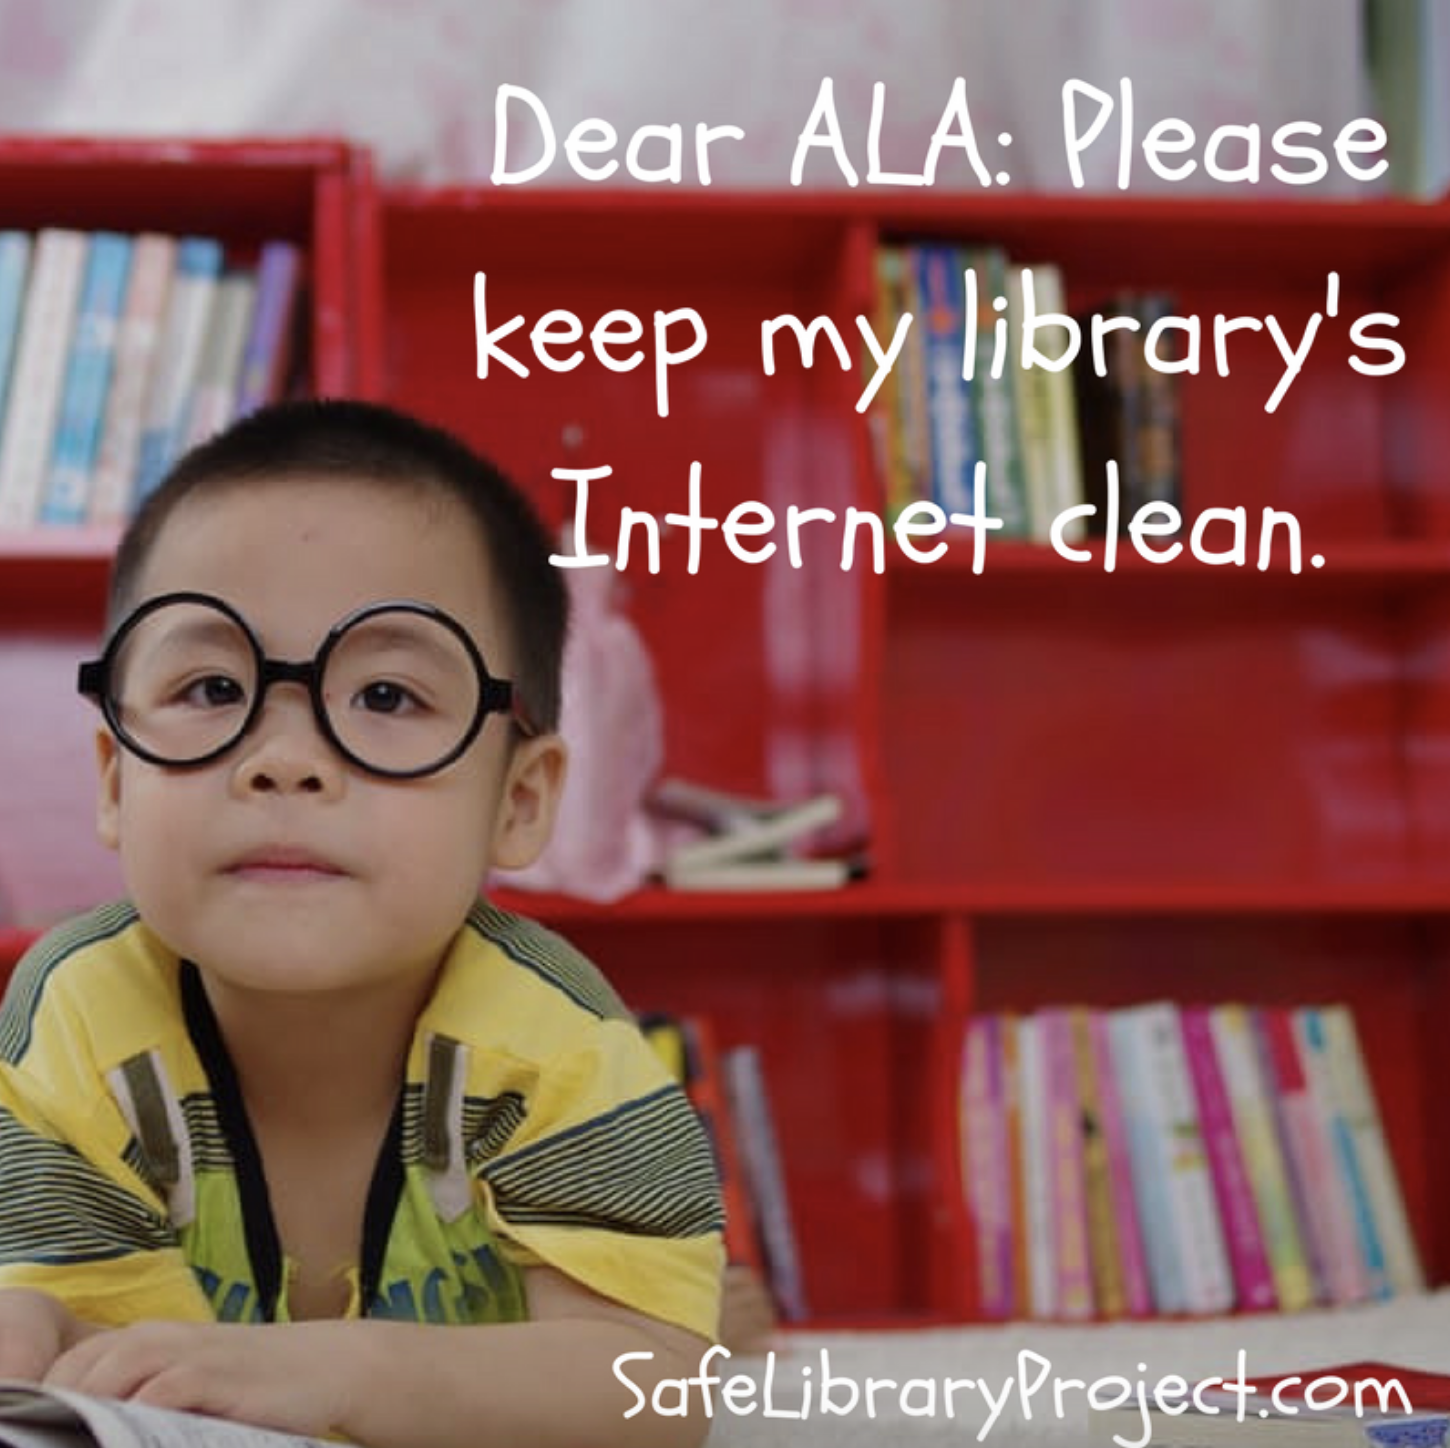 "Dear American Library Association, please keep my library's Internet clean."